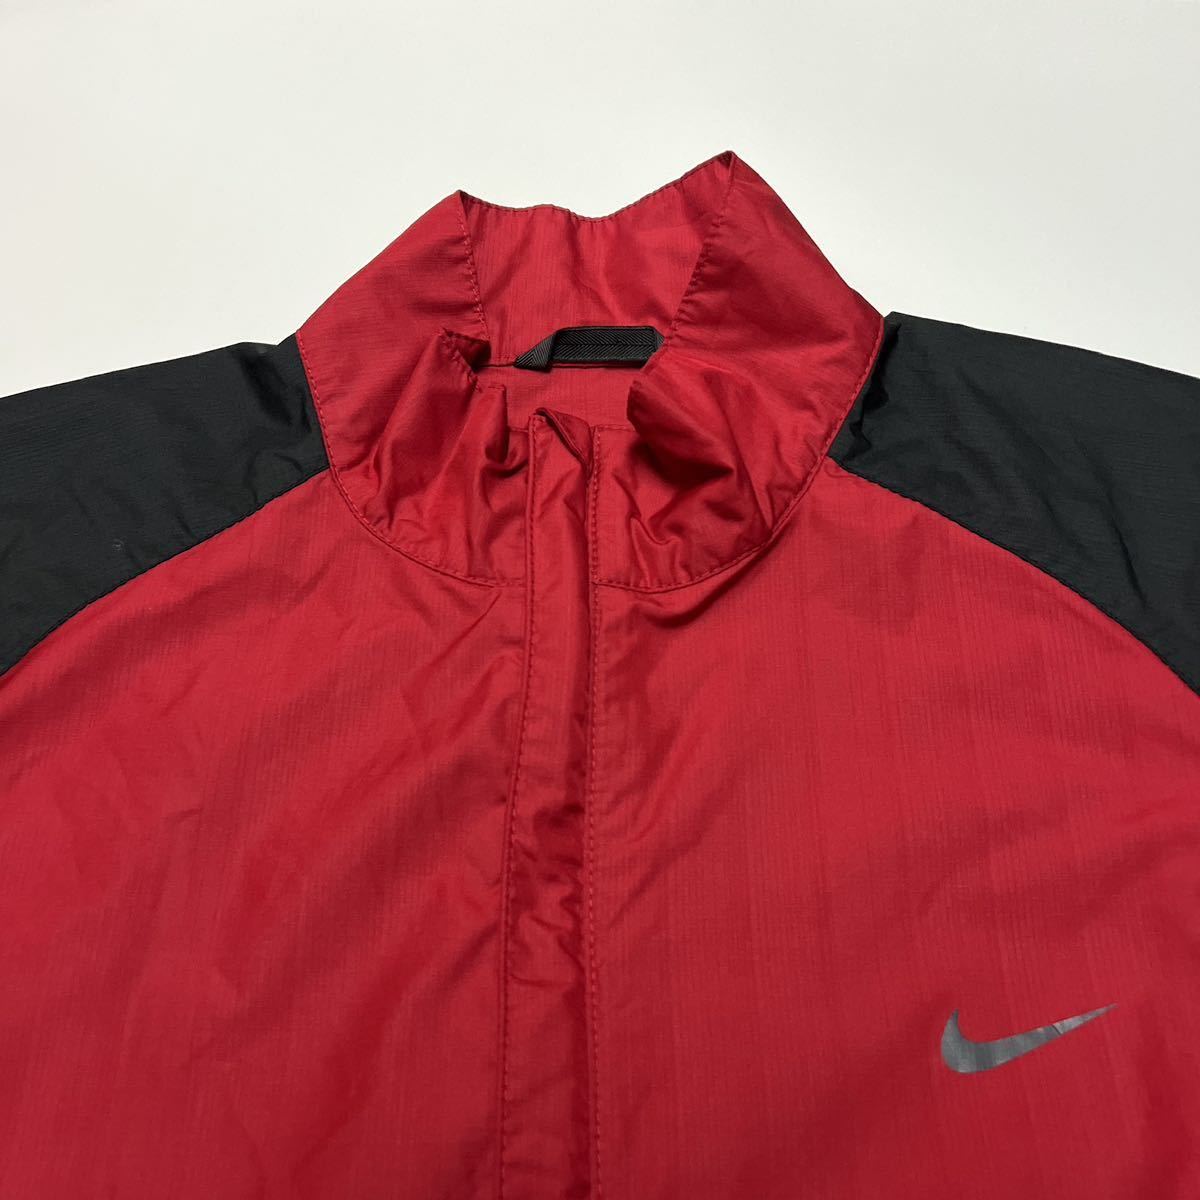 NIKE GOLF Nike Golf короткий рукав ветровка Golf одежда красный L